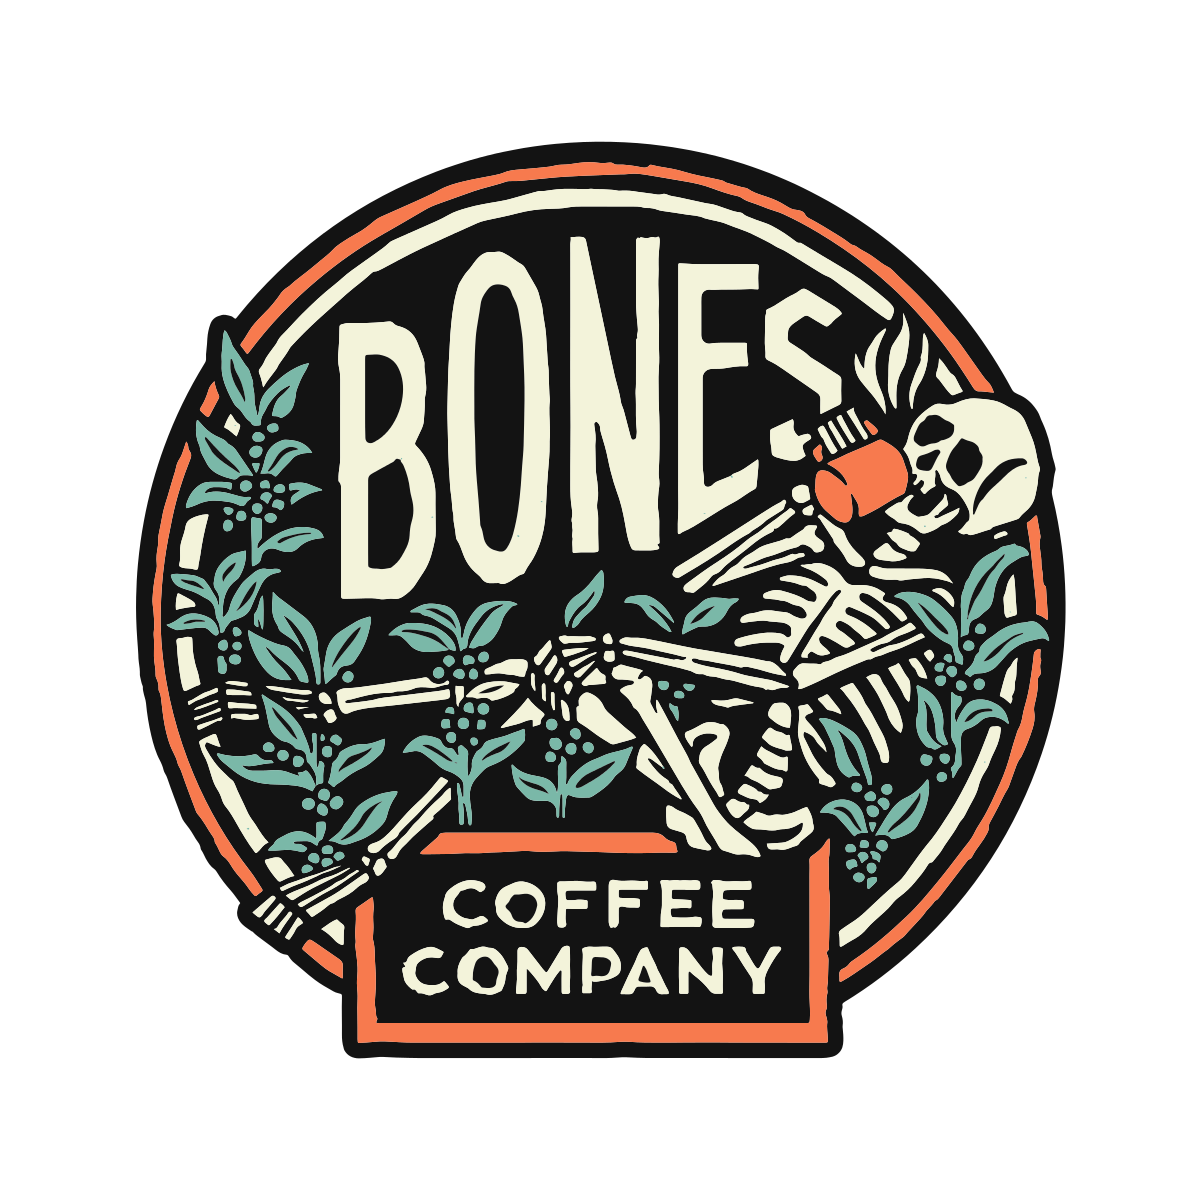 30 oz. Stainless Steel Tumbler – Bones Coffee Company